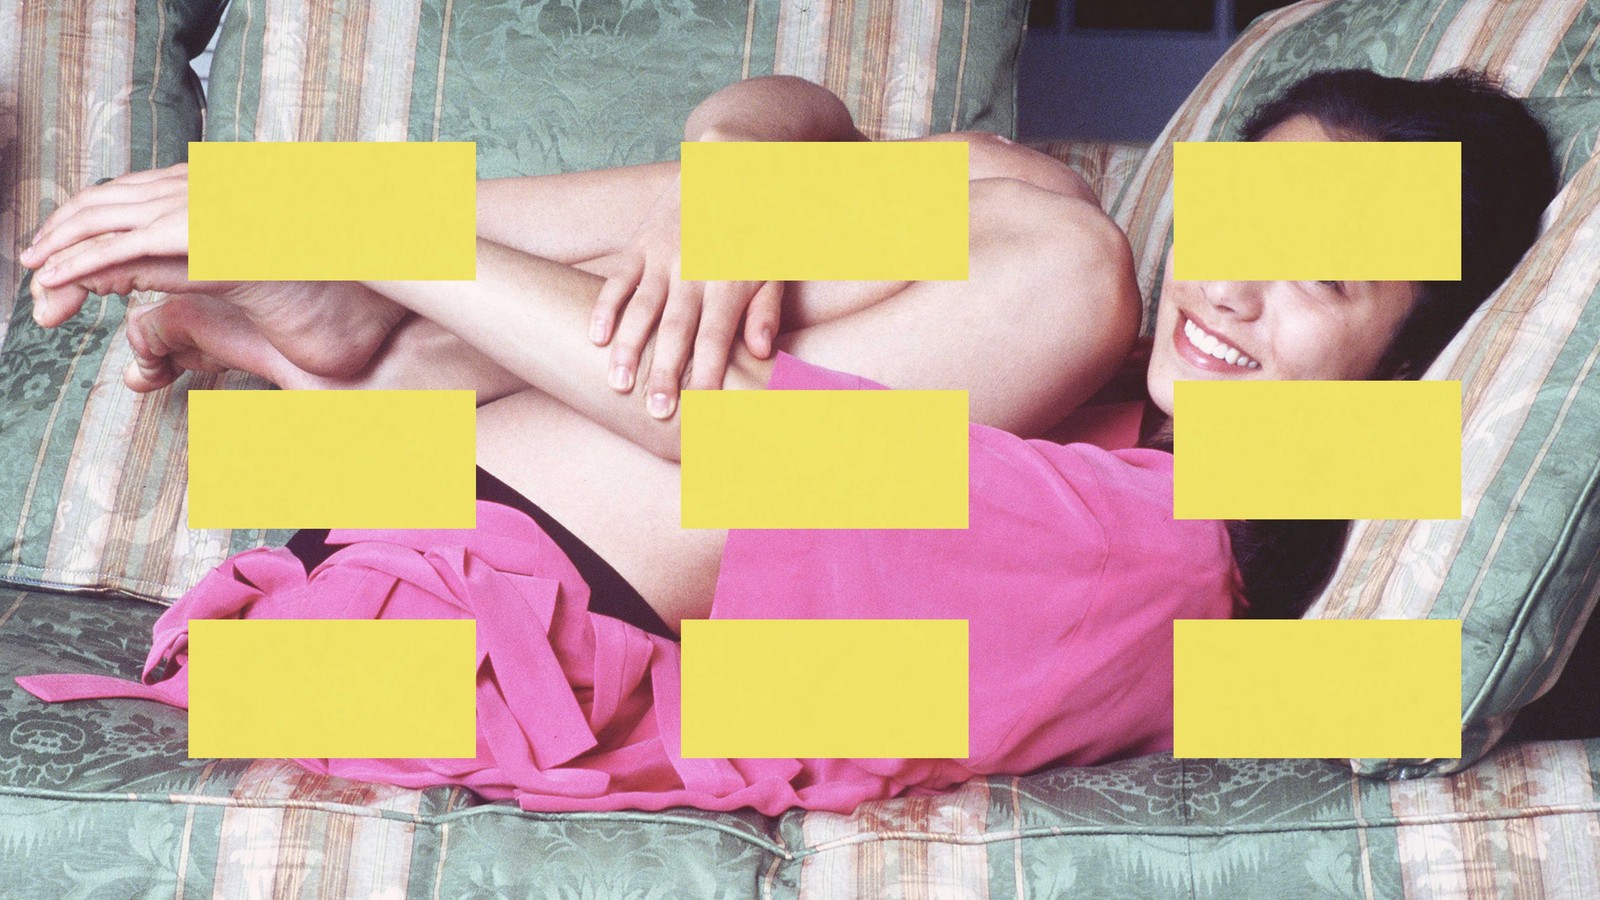 Sex Hd Nude Rape - Melissa Febos's 'Girlhood' Is a Lucid ExposÃ© on Rape Culture - The Atlantic